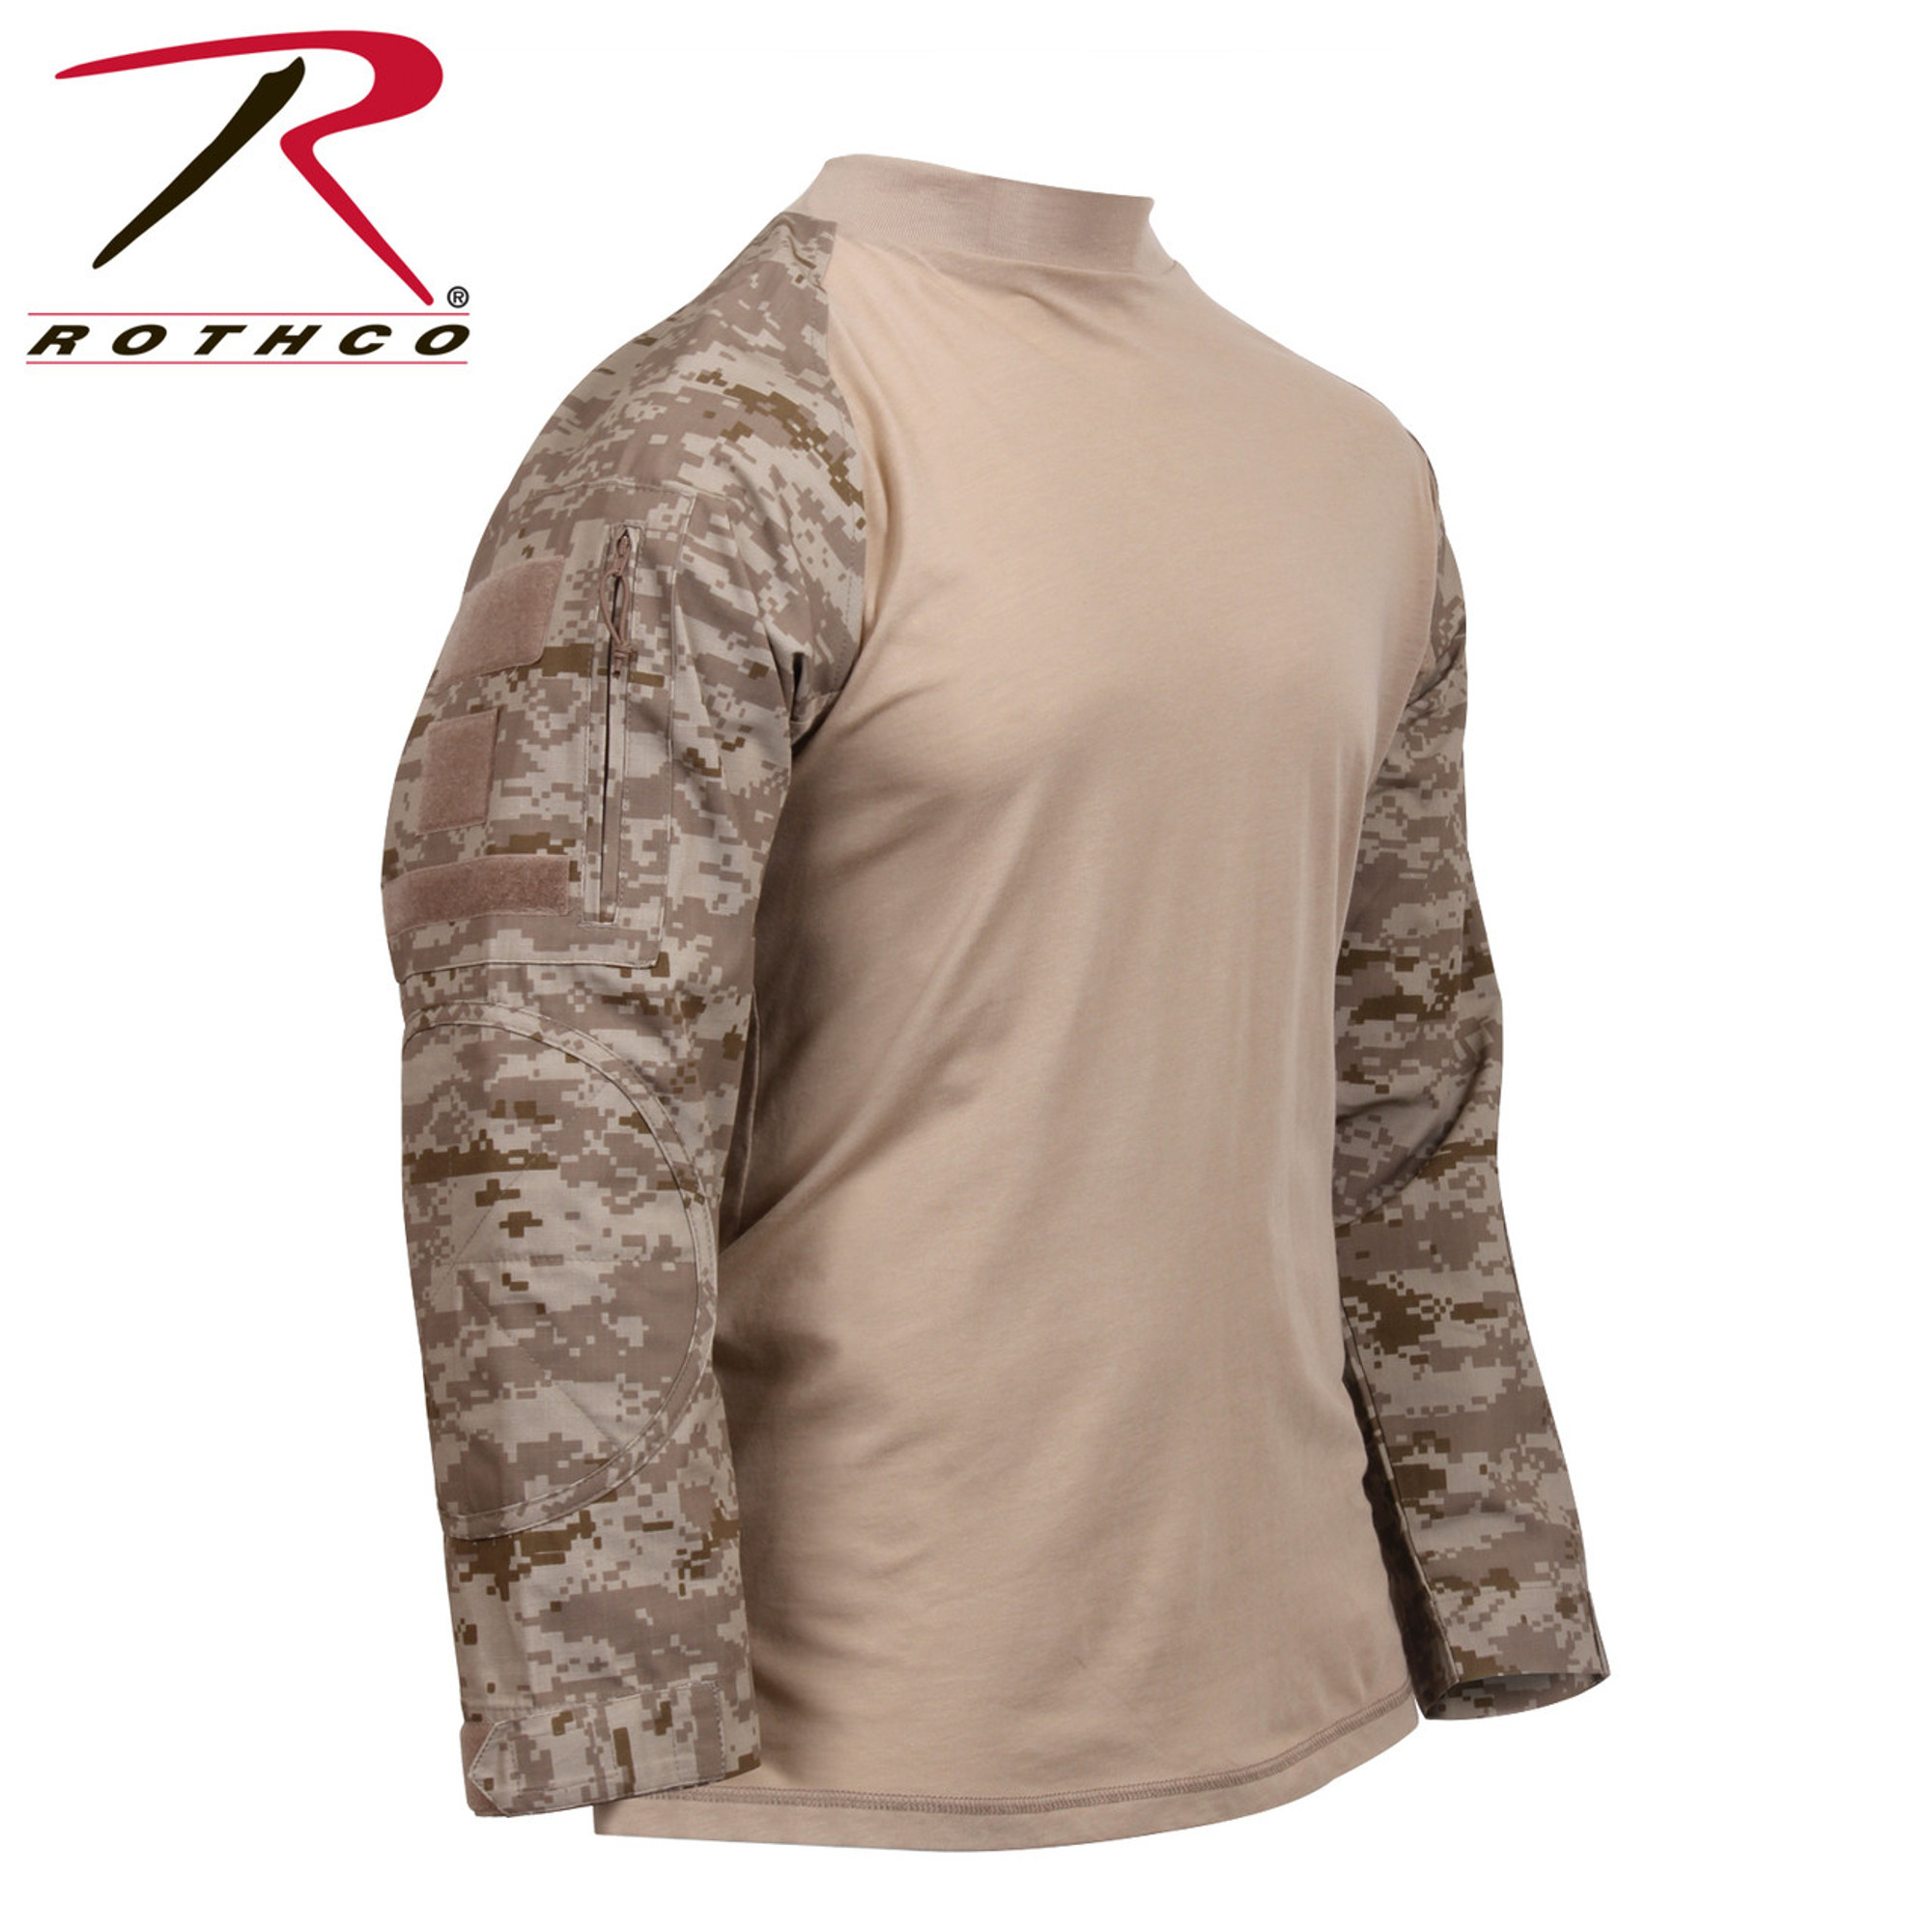 Tactical Airsoft Combat Shirt - Desert Digital Camo